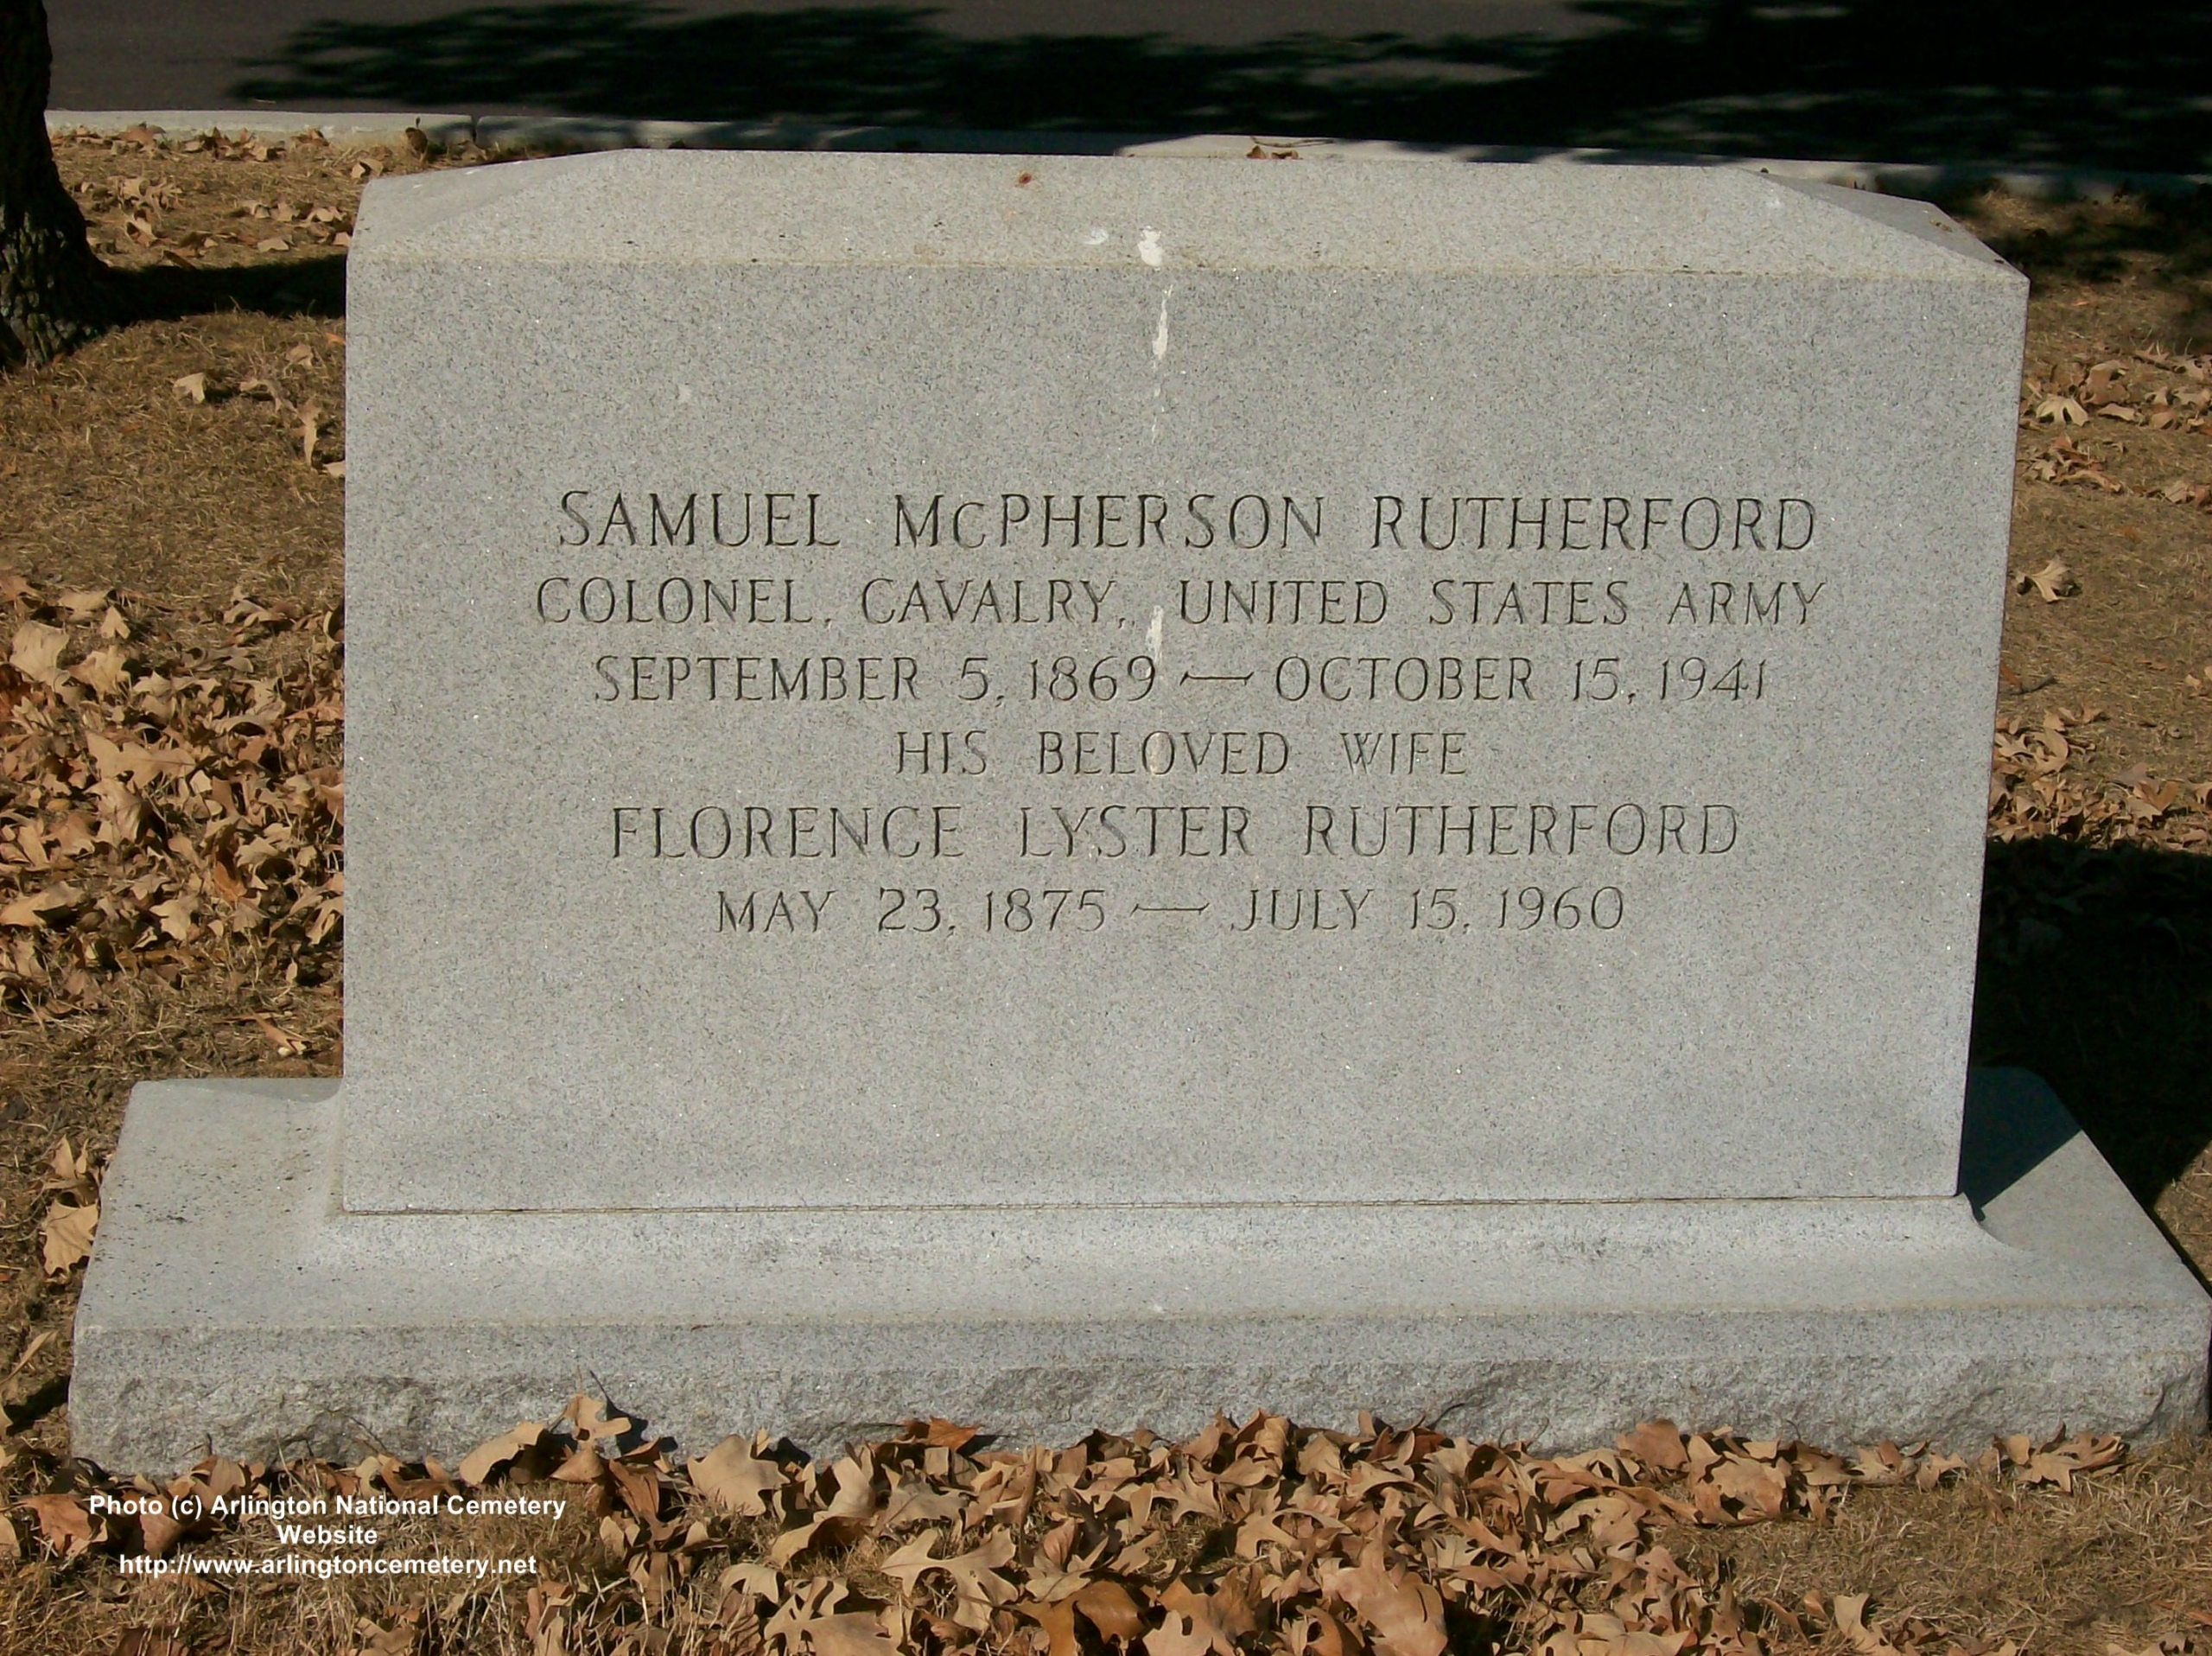 smrutherford-gravesite-photo-october-2007-001